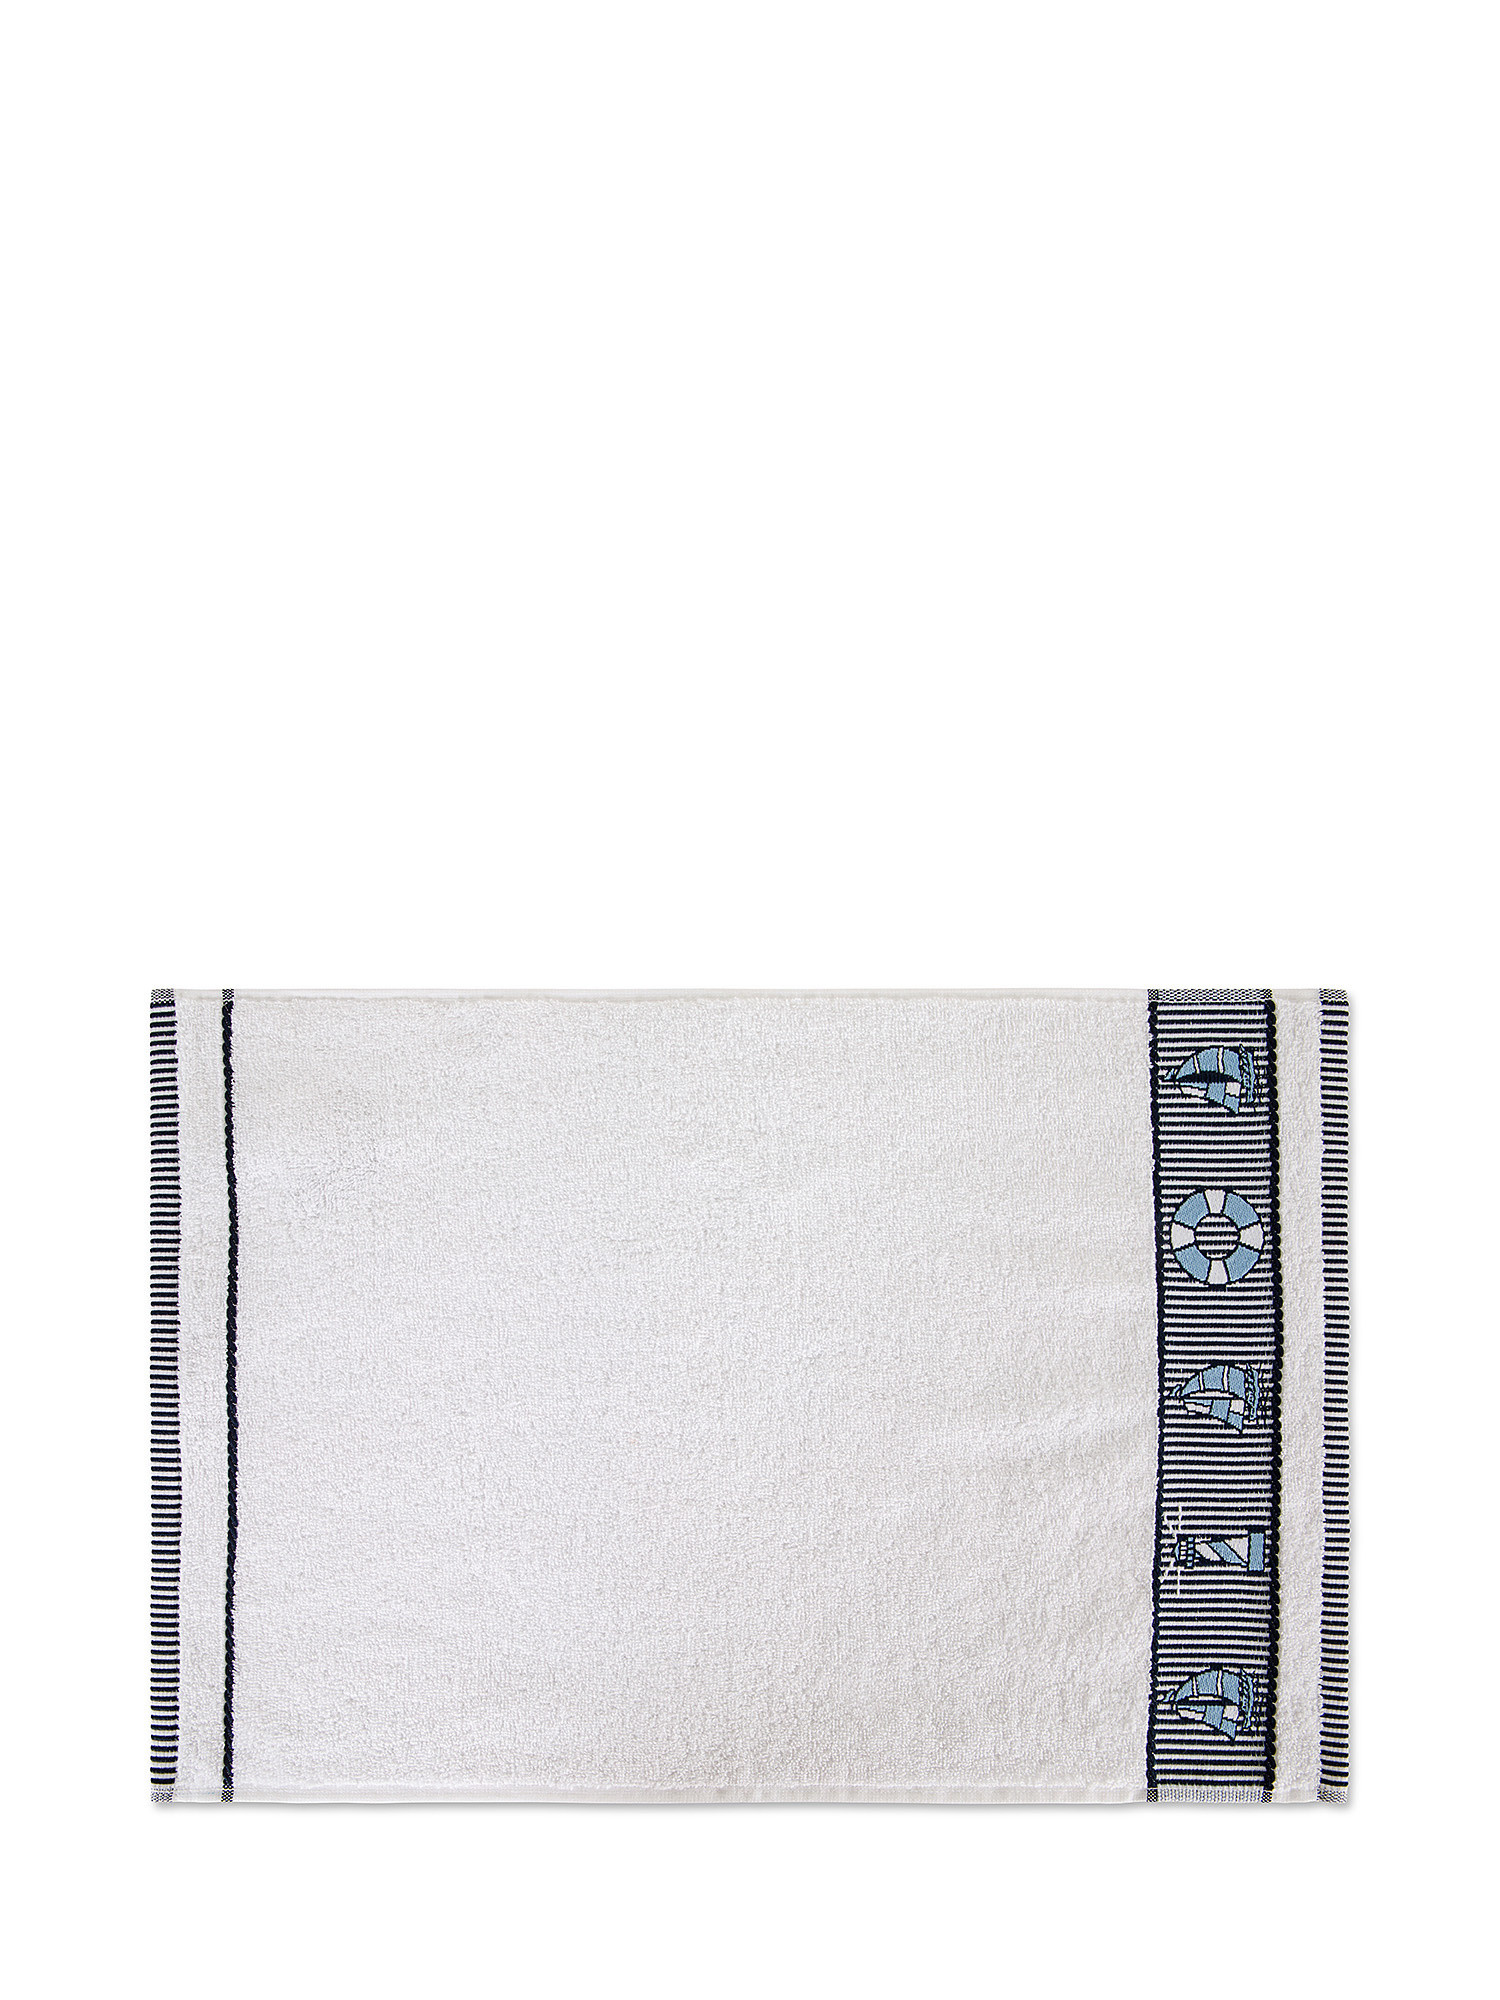 Asciugamano cotone bordo nautico, Bianco, large